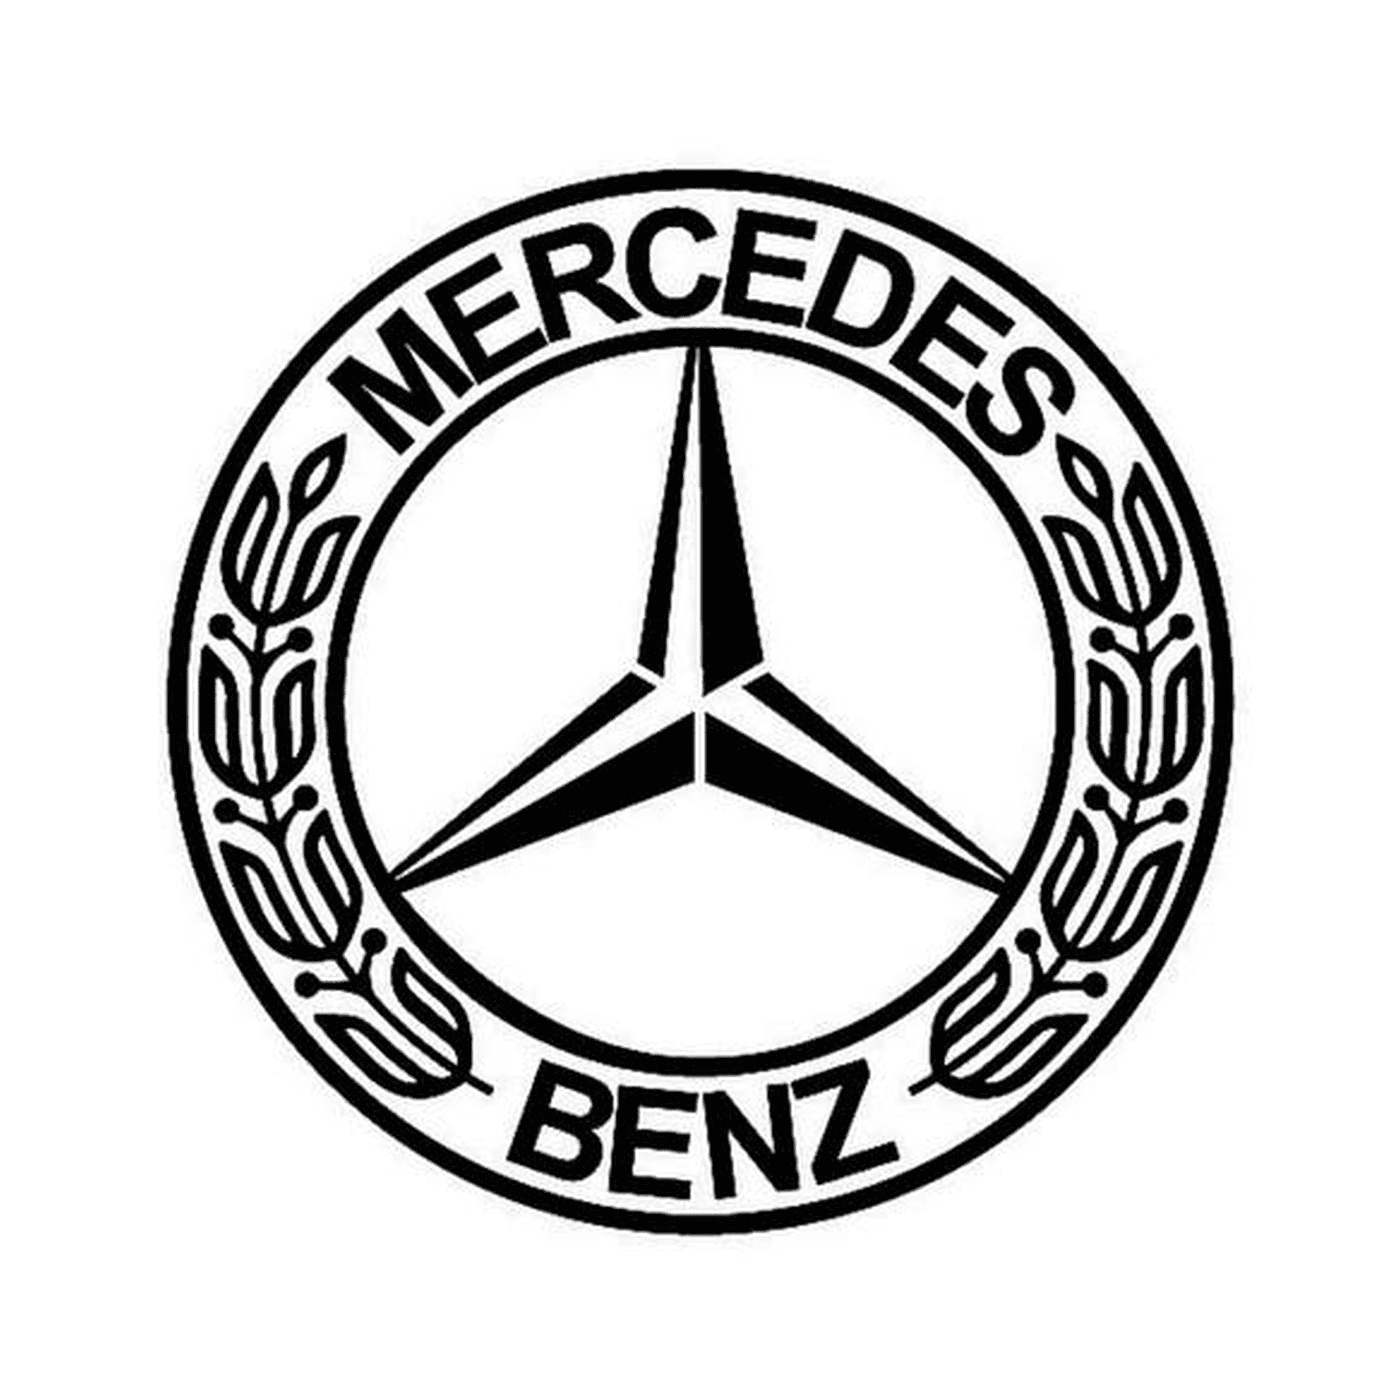  Distinctive Mercedes logo 